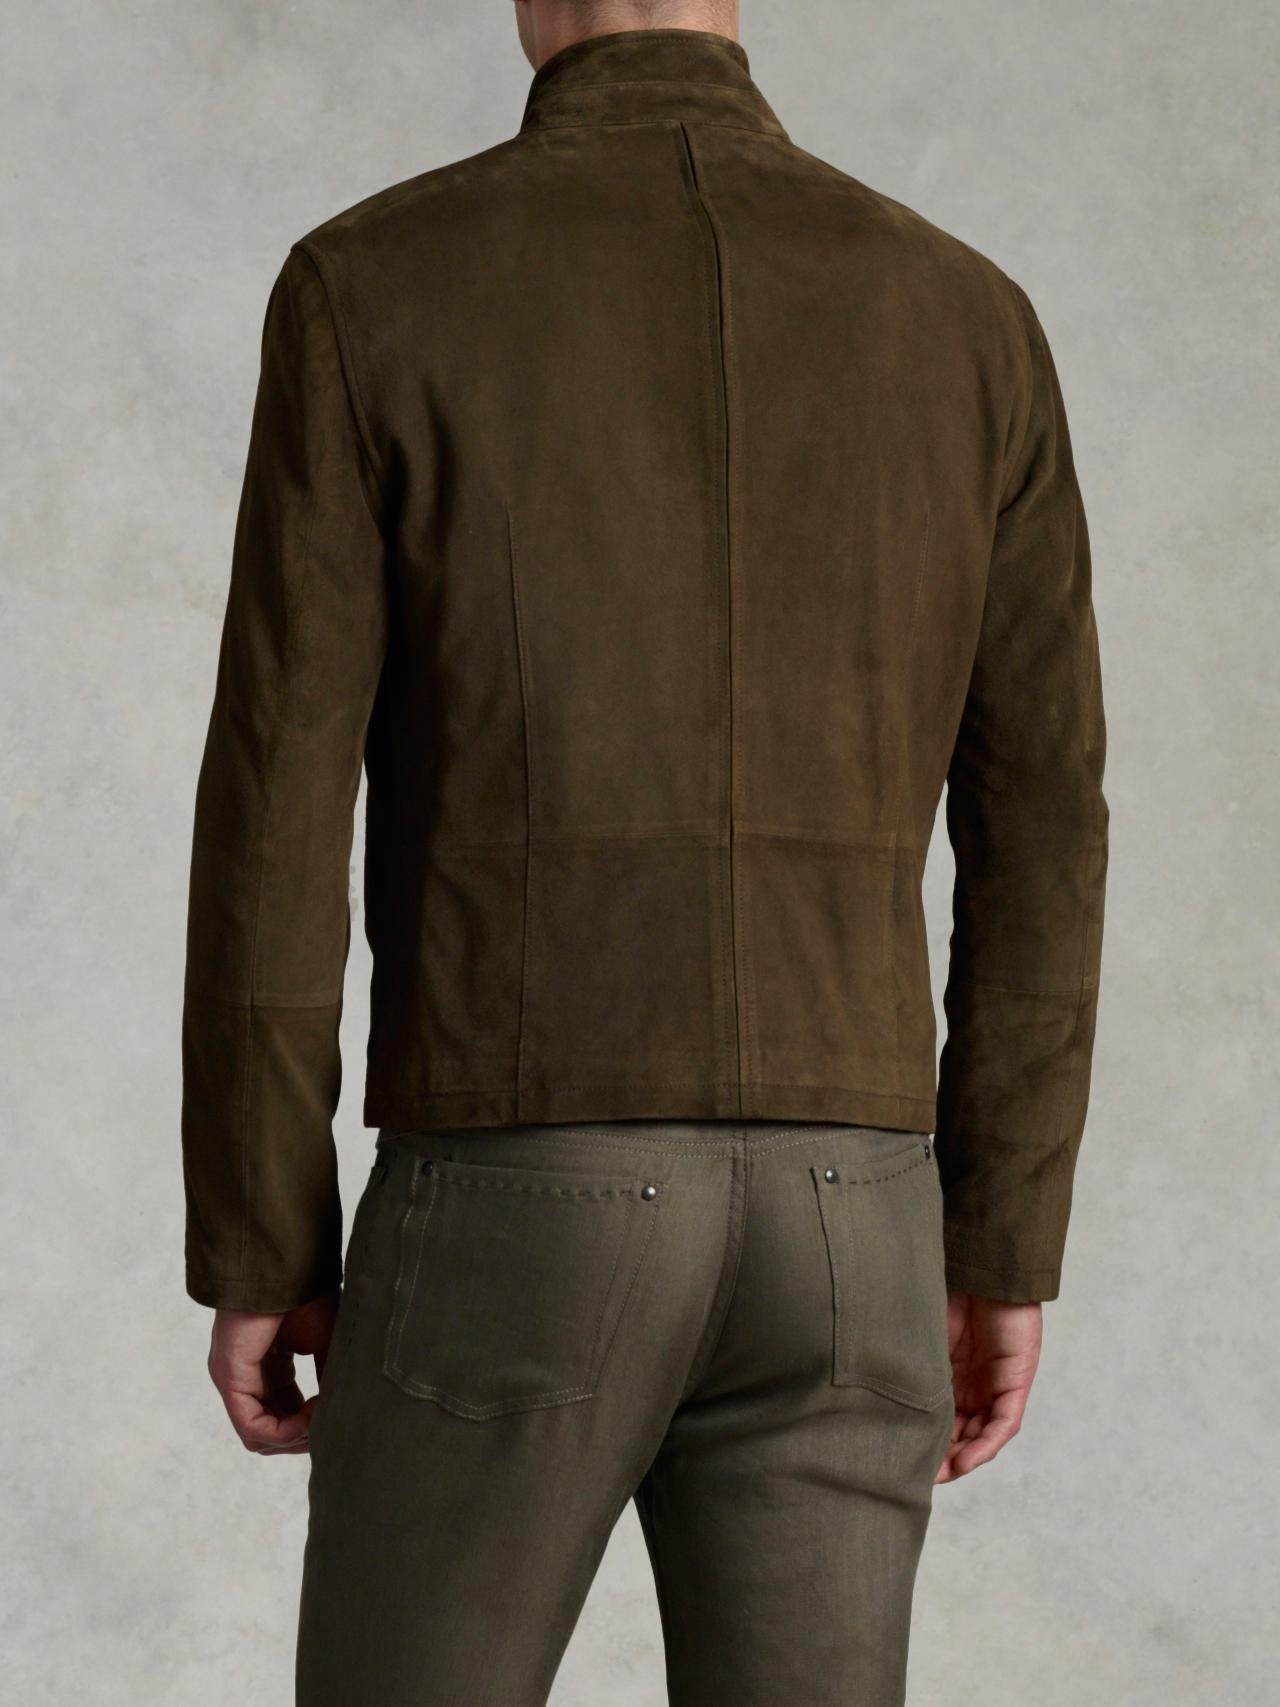 john-varvatos-brown-split-seam-leather-jacket-product-1-21919224-1-582786649-normal.jpeg